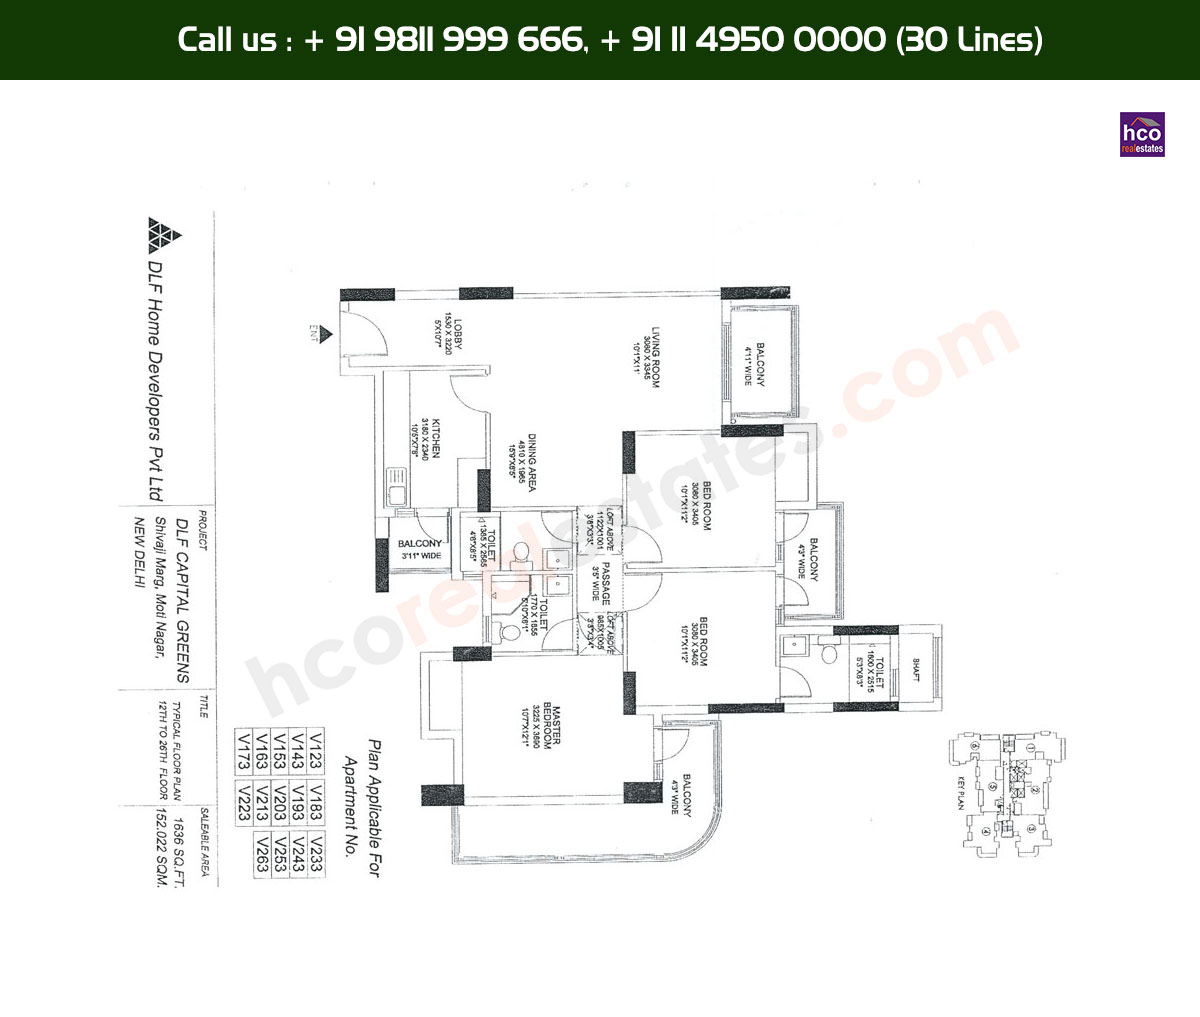 3 BHK + 3T, 12th, 26th, Typical Floor Plan, V123 - V263 Block: 1636 Sq. Ft.